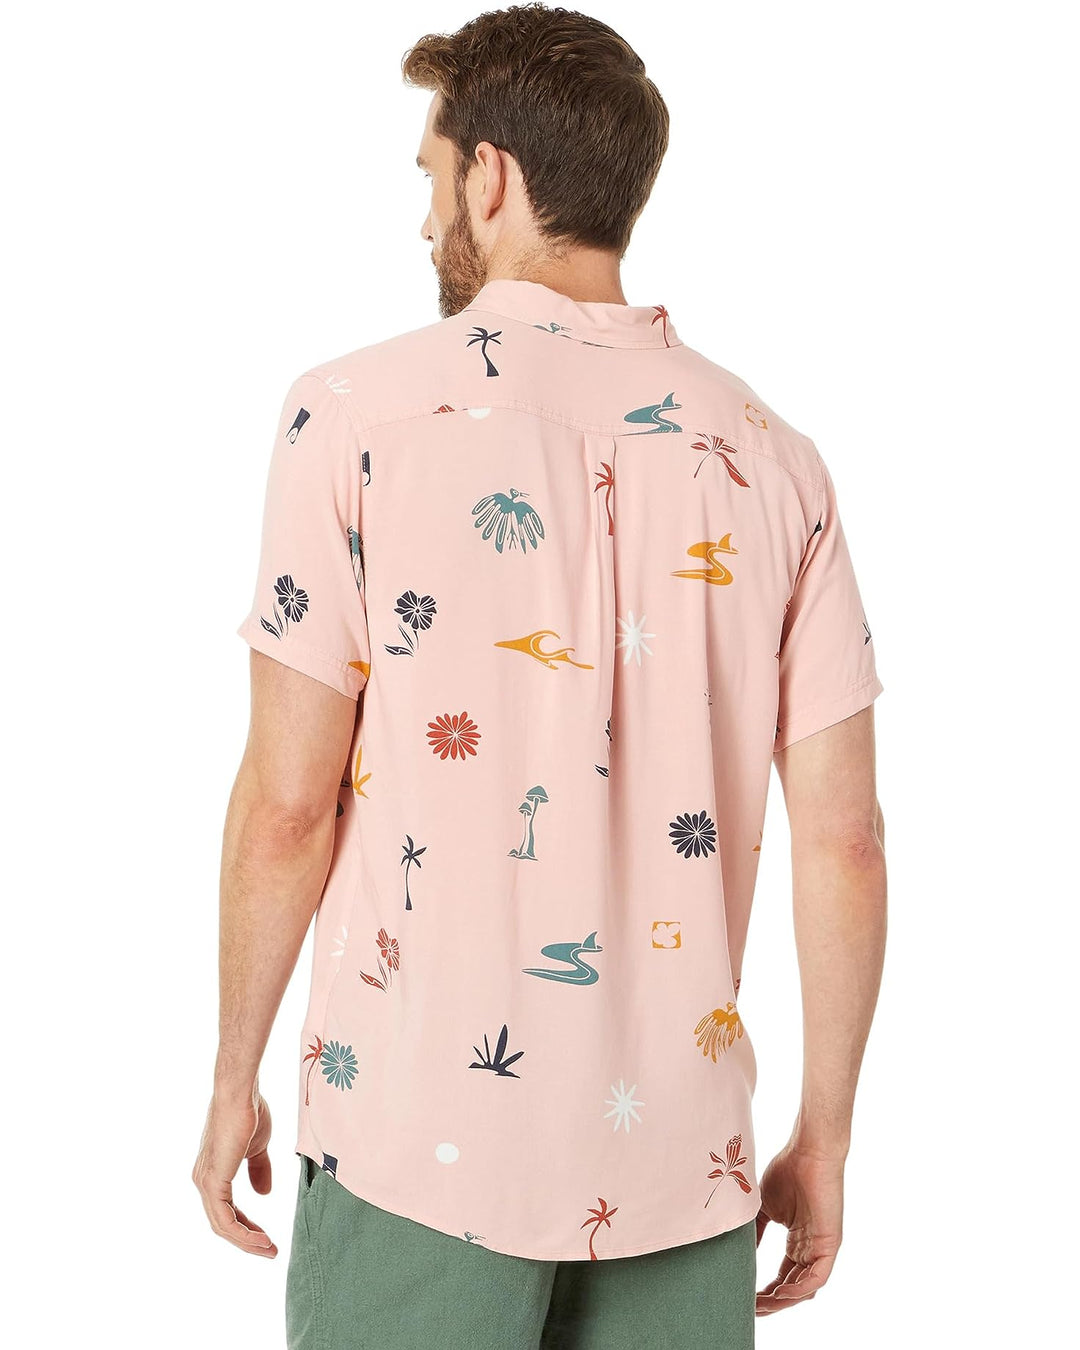 Rip Curl Party Pack Short Sleeve Shirt - Lightpeach - Sun Diego Boardshop